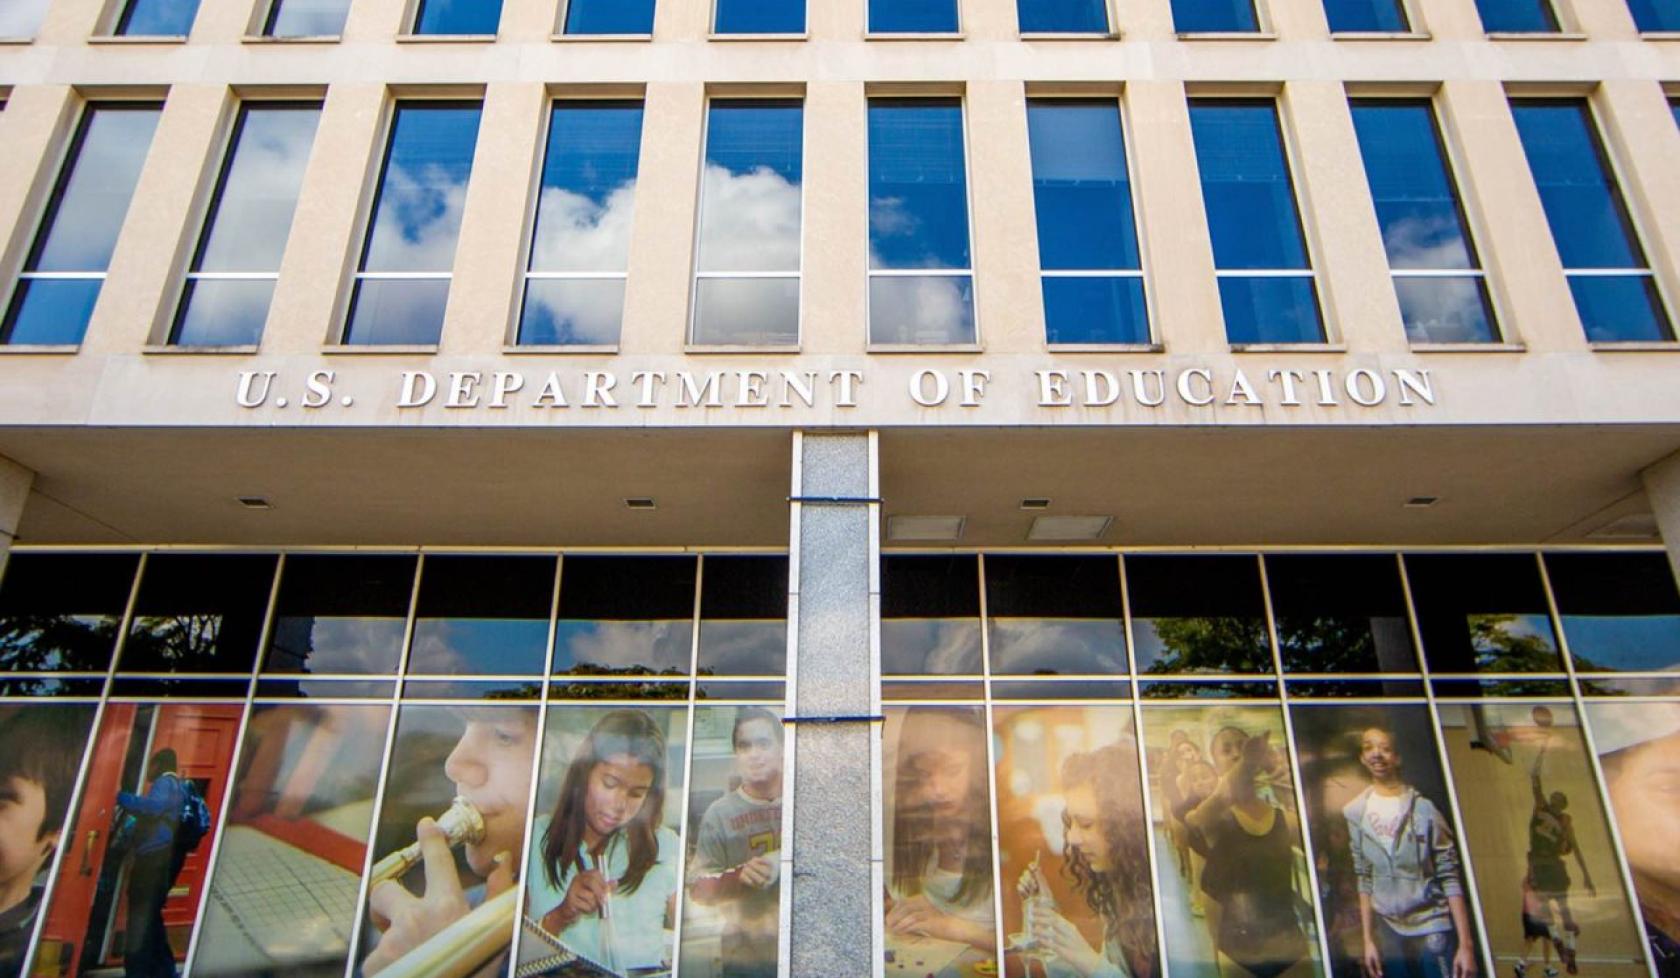 U.S. Department of Education Building